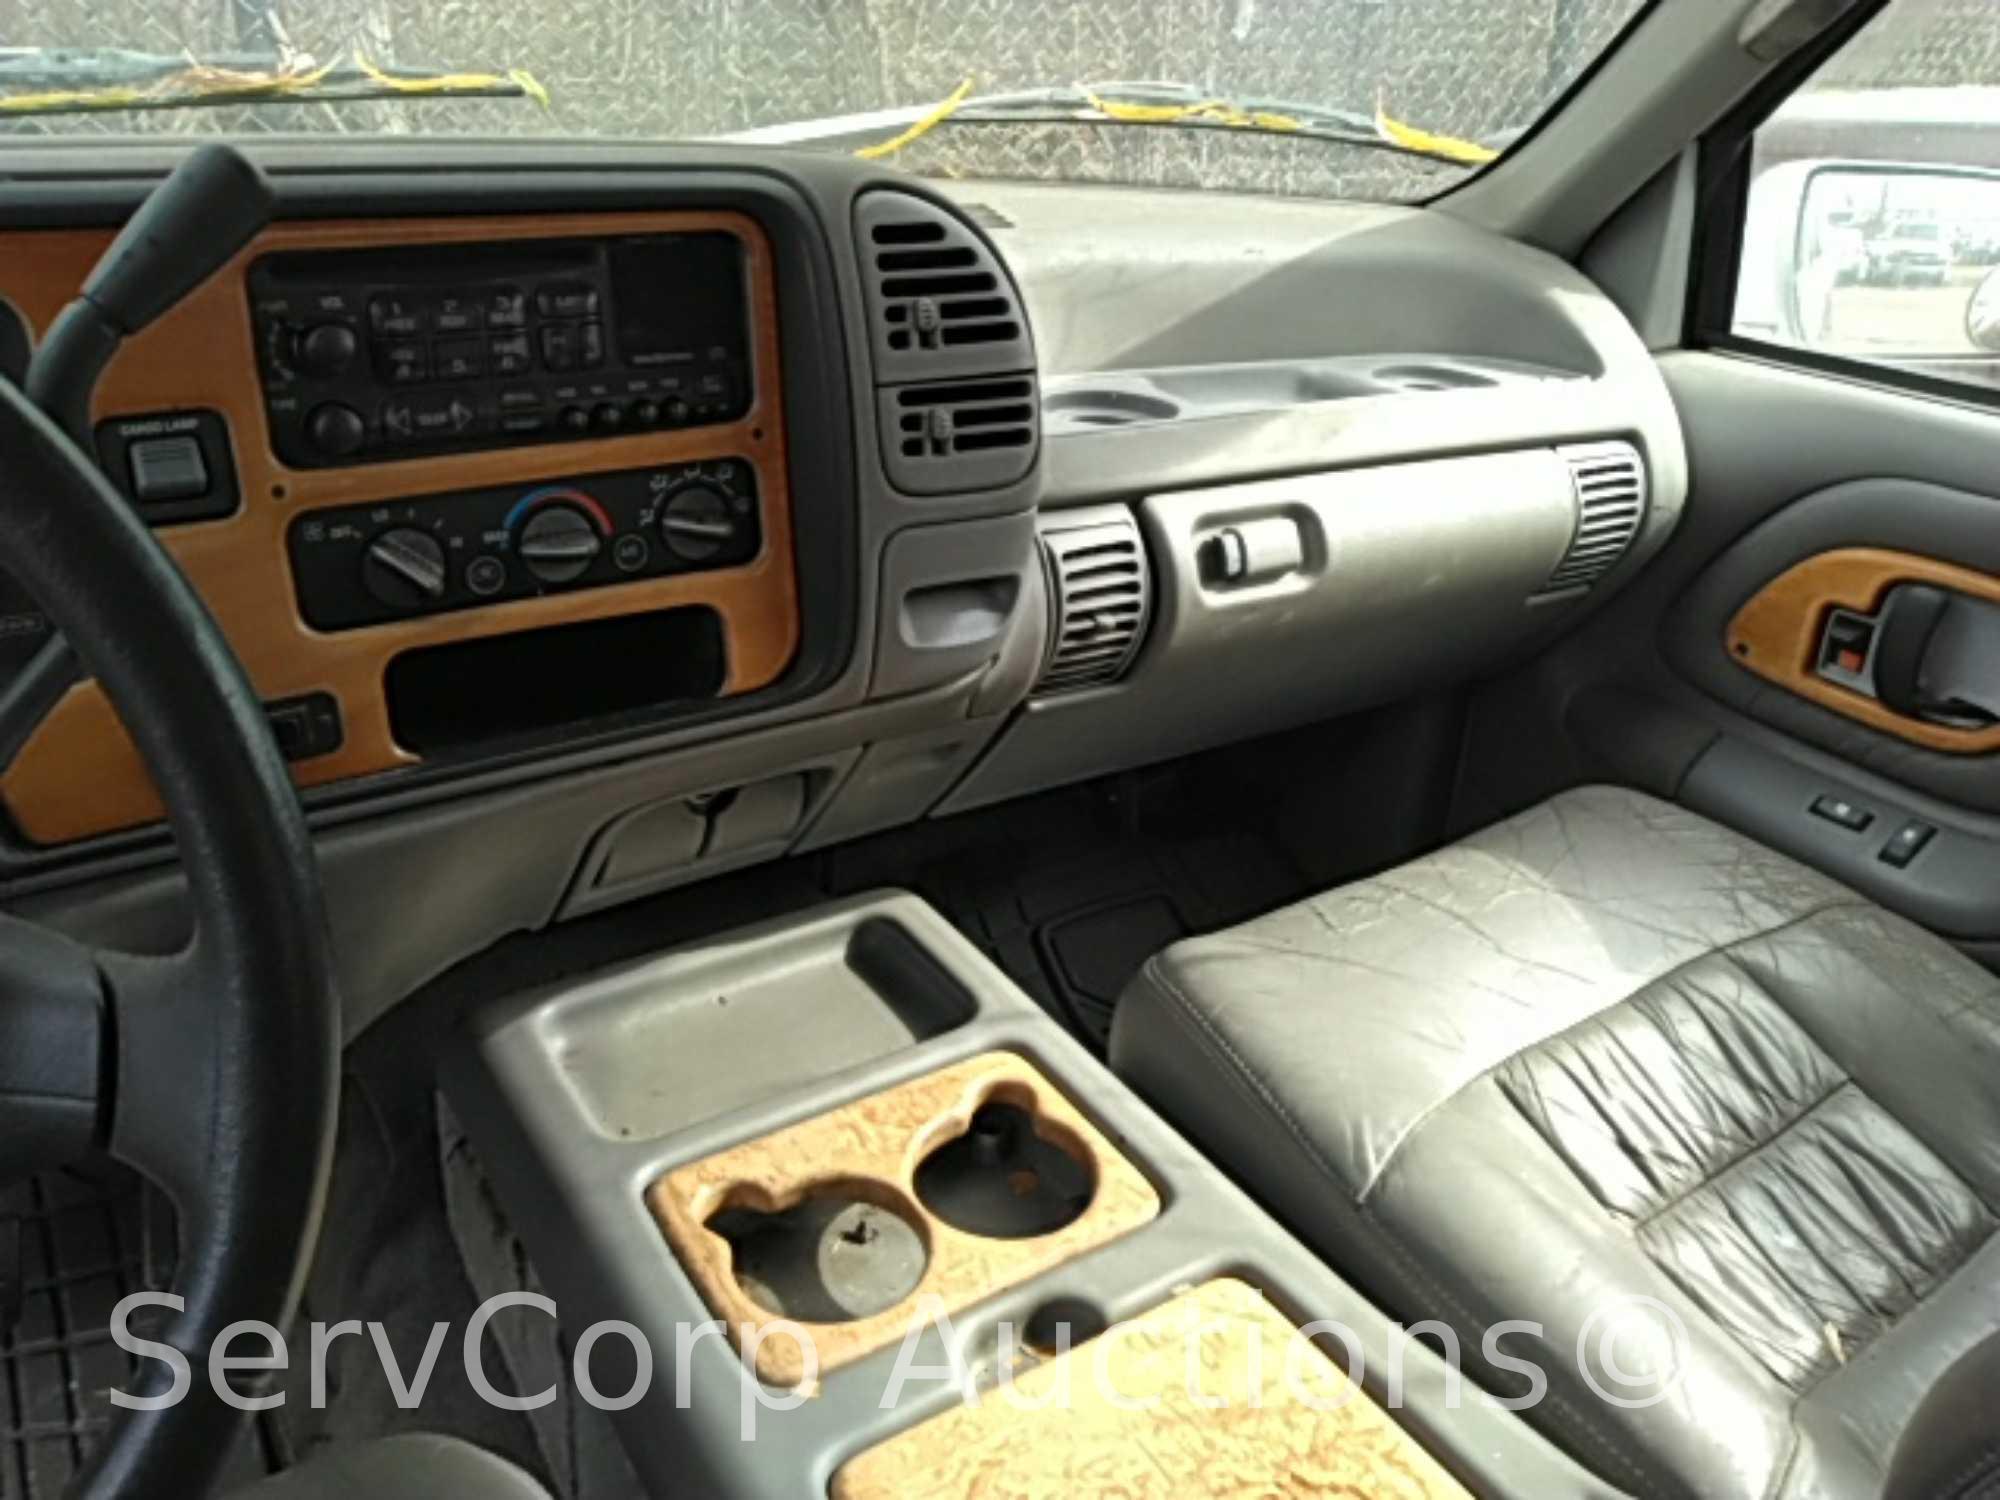 1996 Chevrolet Silverado Pickup Truck, VIN # 2GBEC19R3T1201330